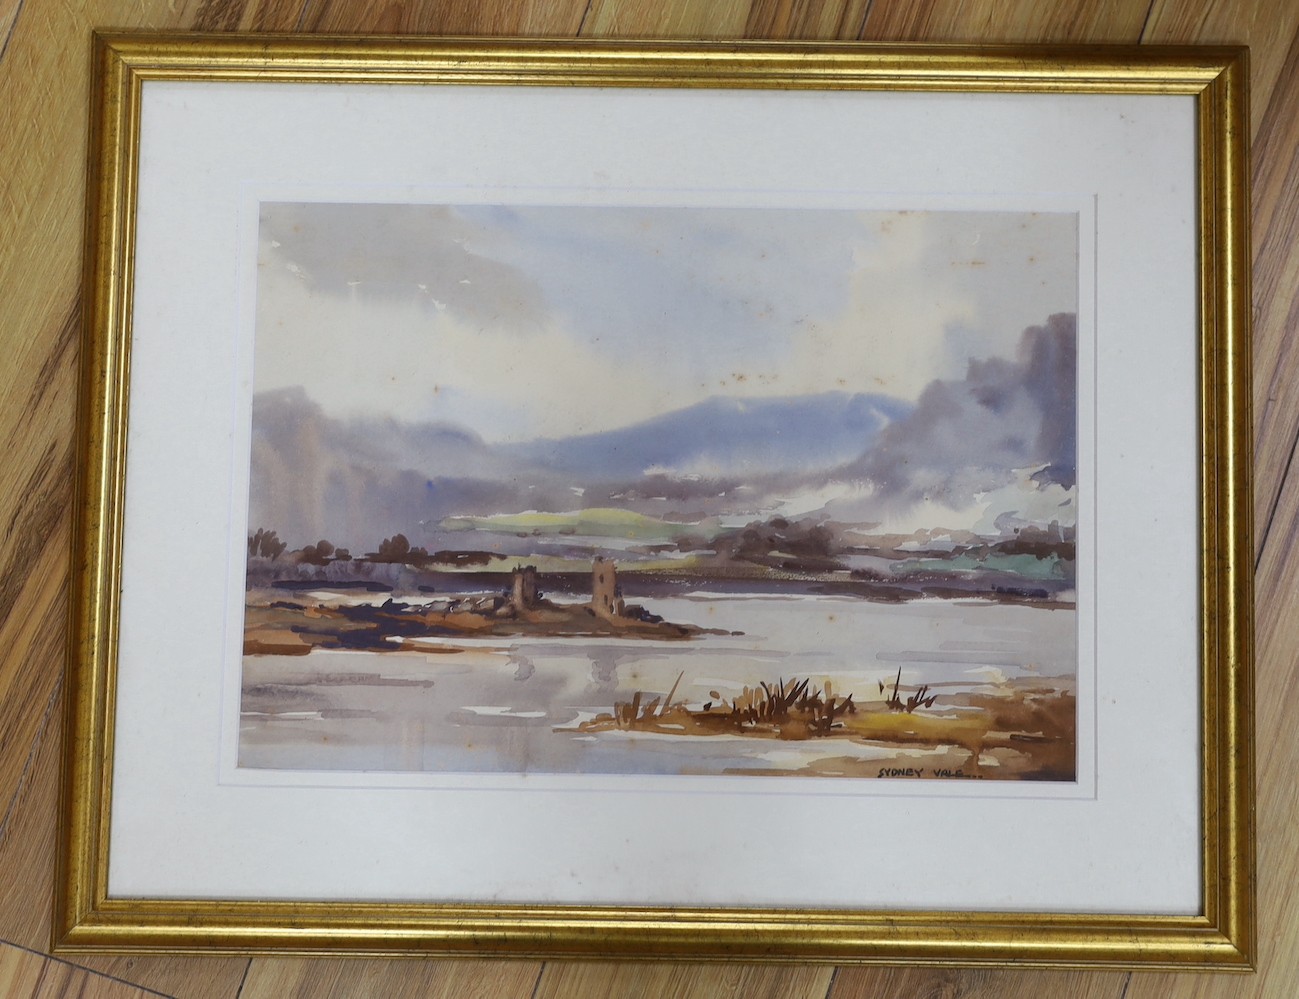 Sydney Vale (1916-1991), watercolour, Loch scene, signed, 33 x 48cm